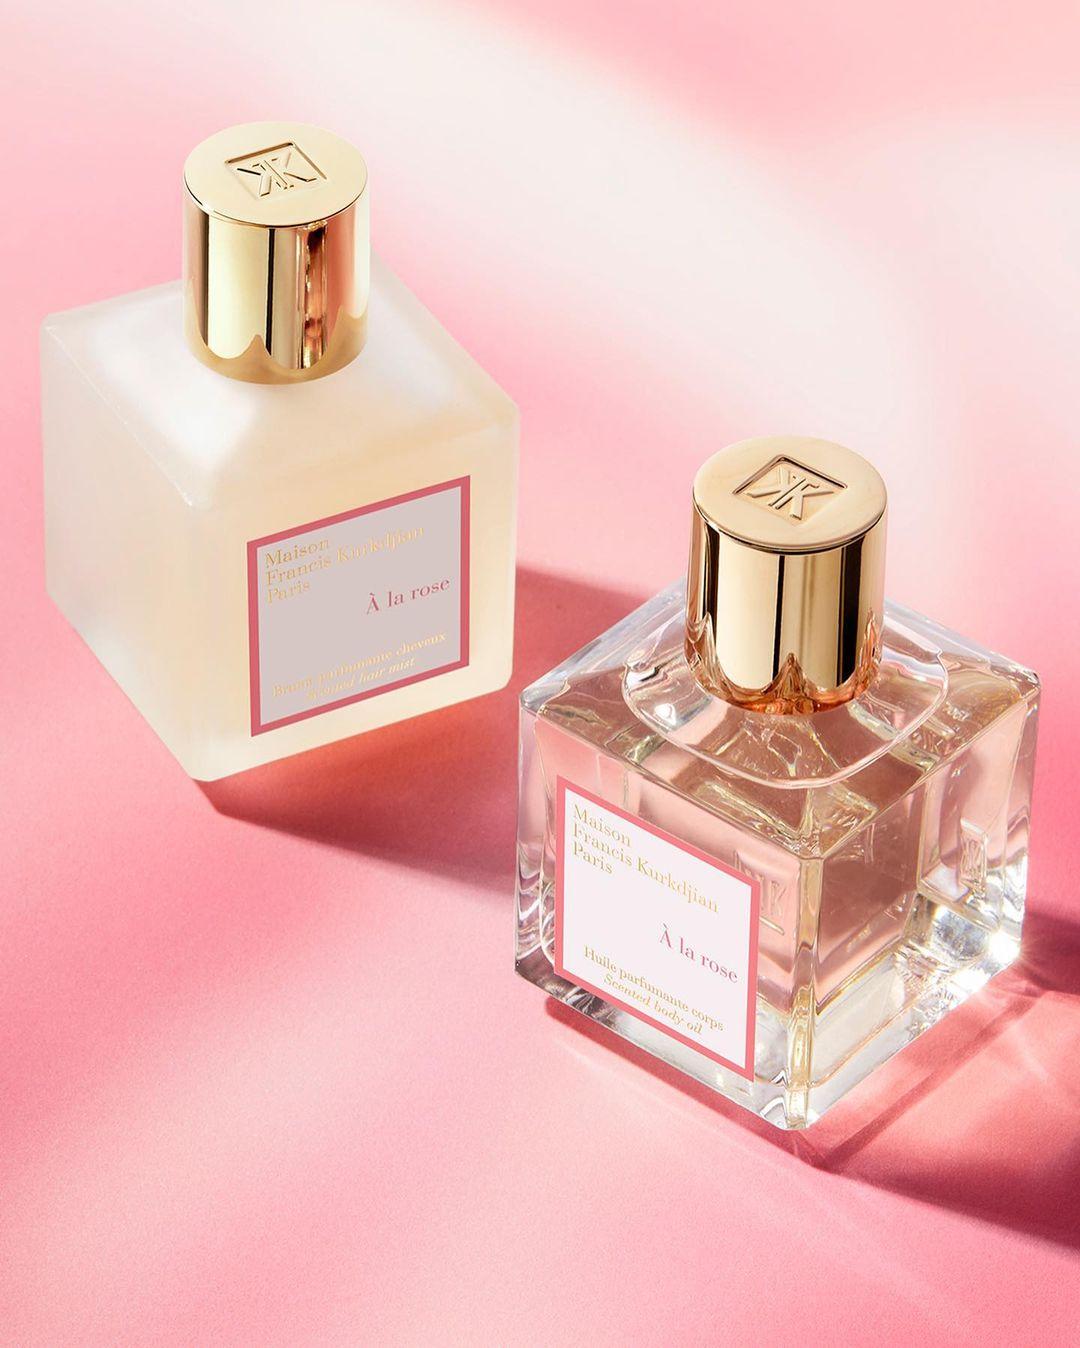 Maison Francis Kurkdjian - A la rose - L'homme a la rose - body oil - hair mist | Perfume Lounge